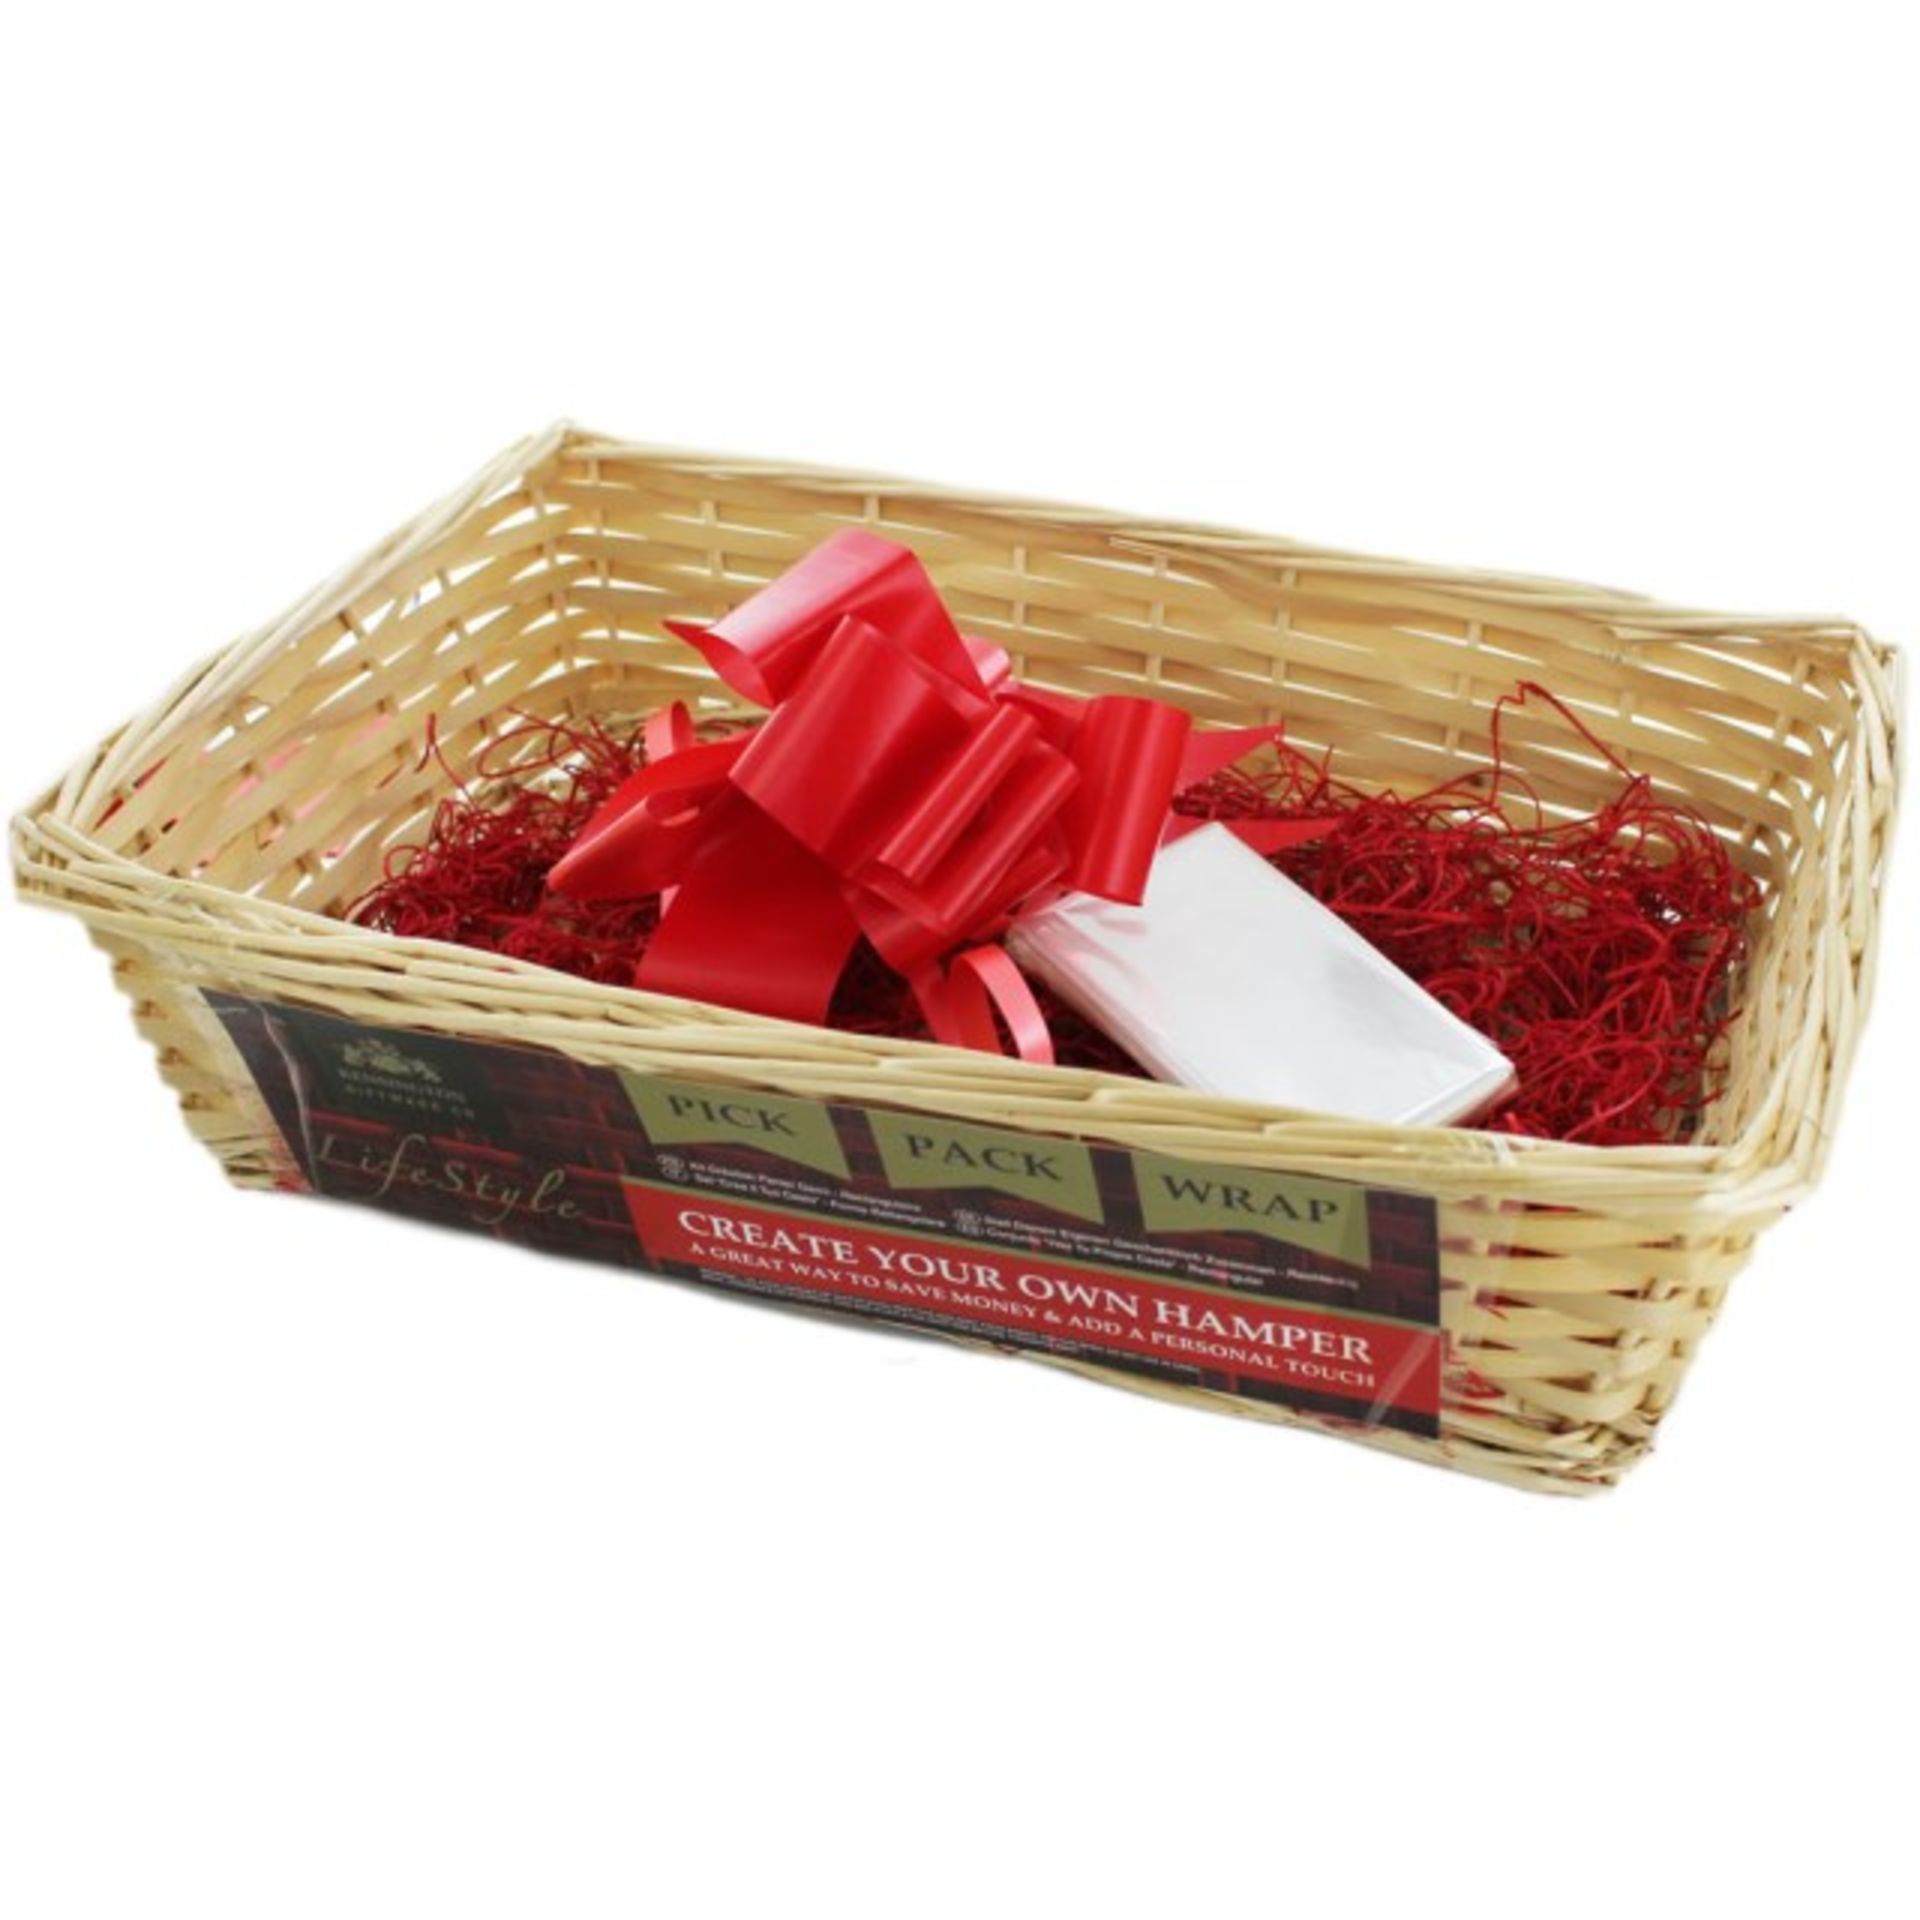 + VAT Brand New Hamper Kit - Create your own Hamper includes Basket, Ribbon,Wood wool packaging,